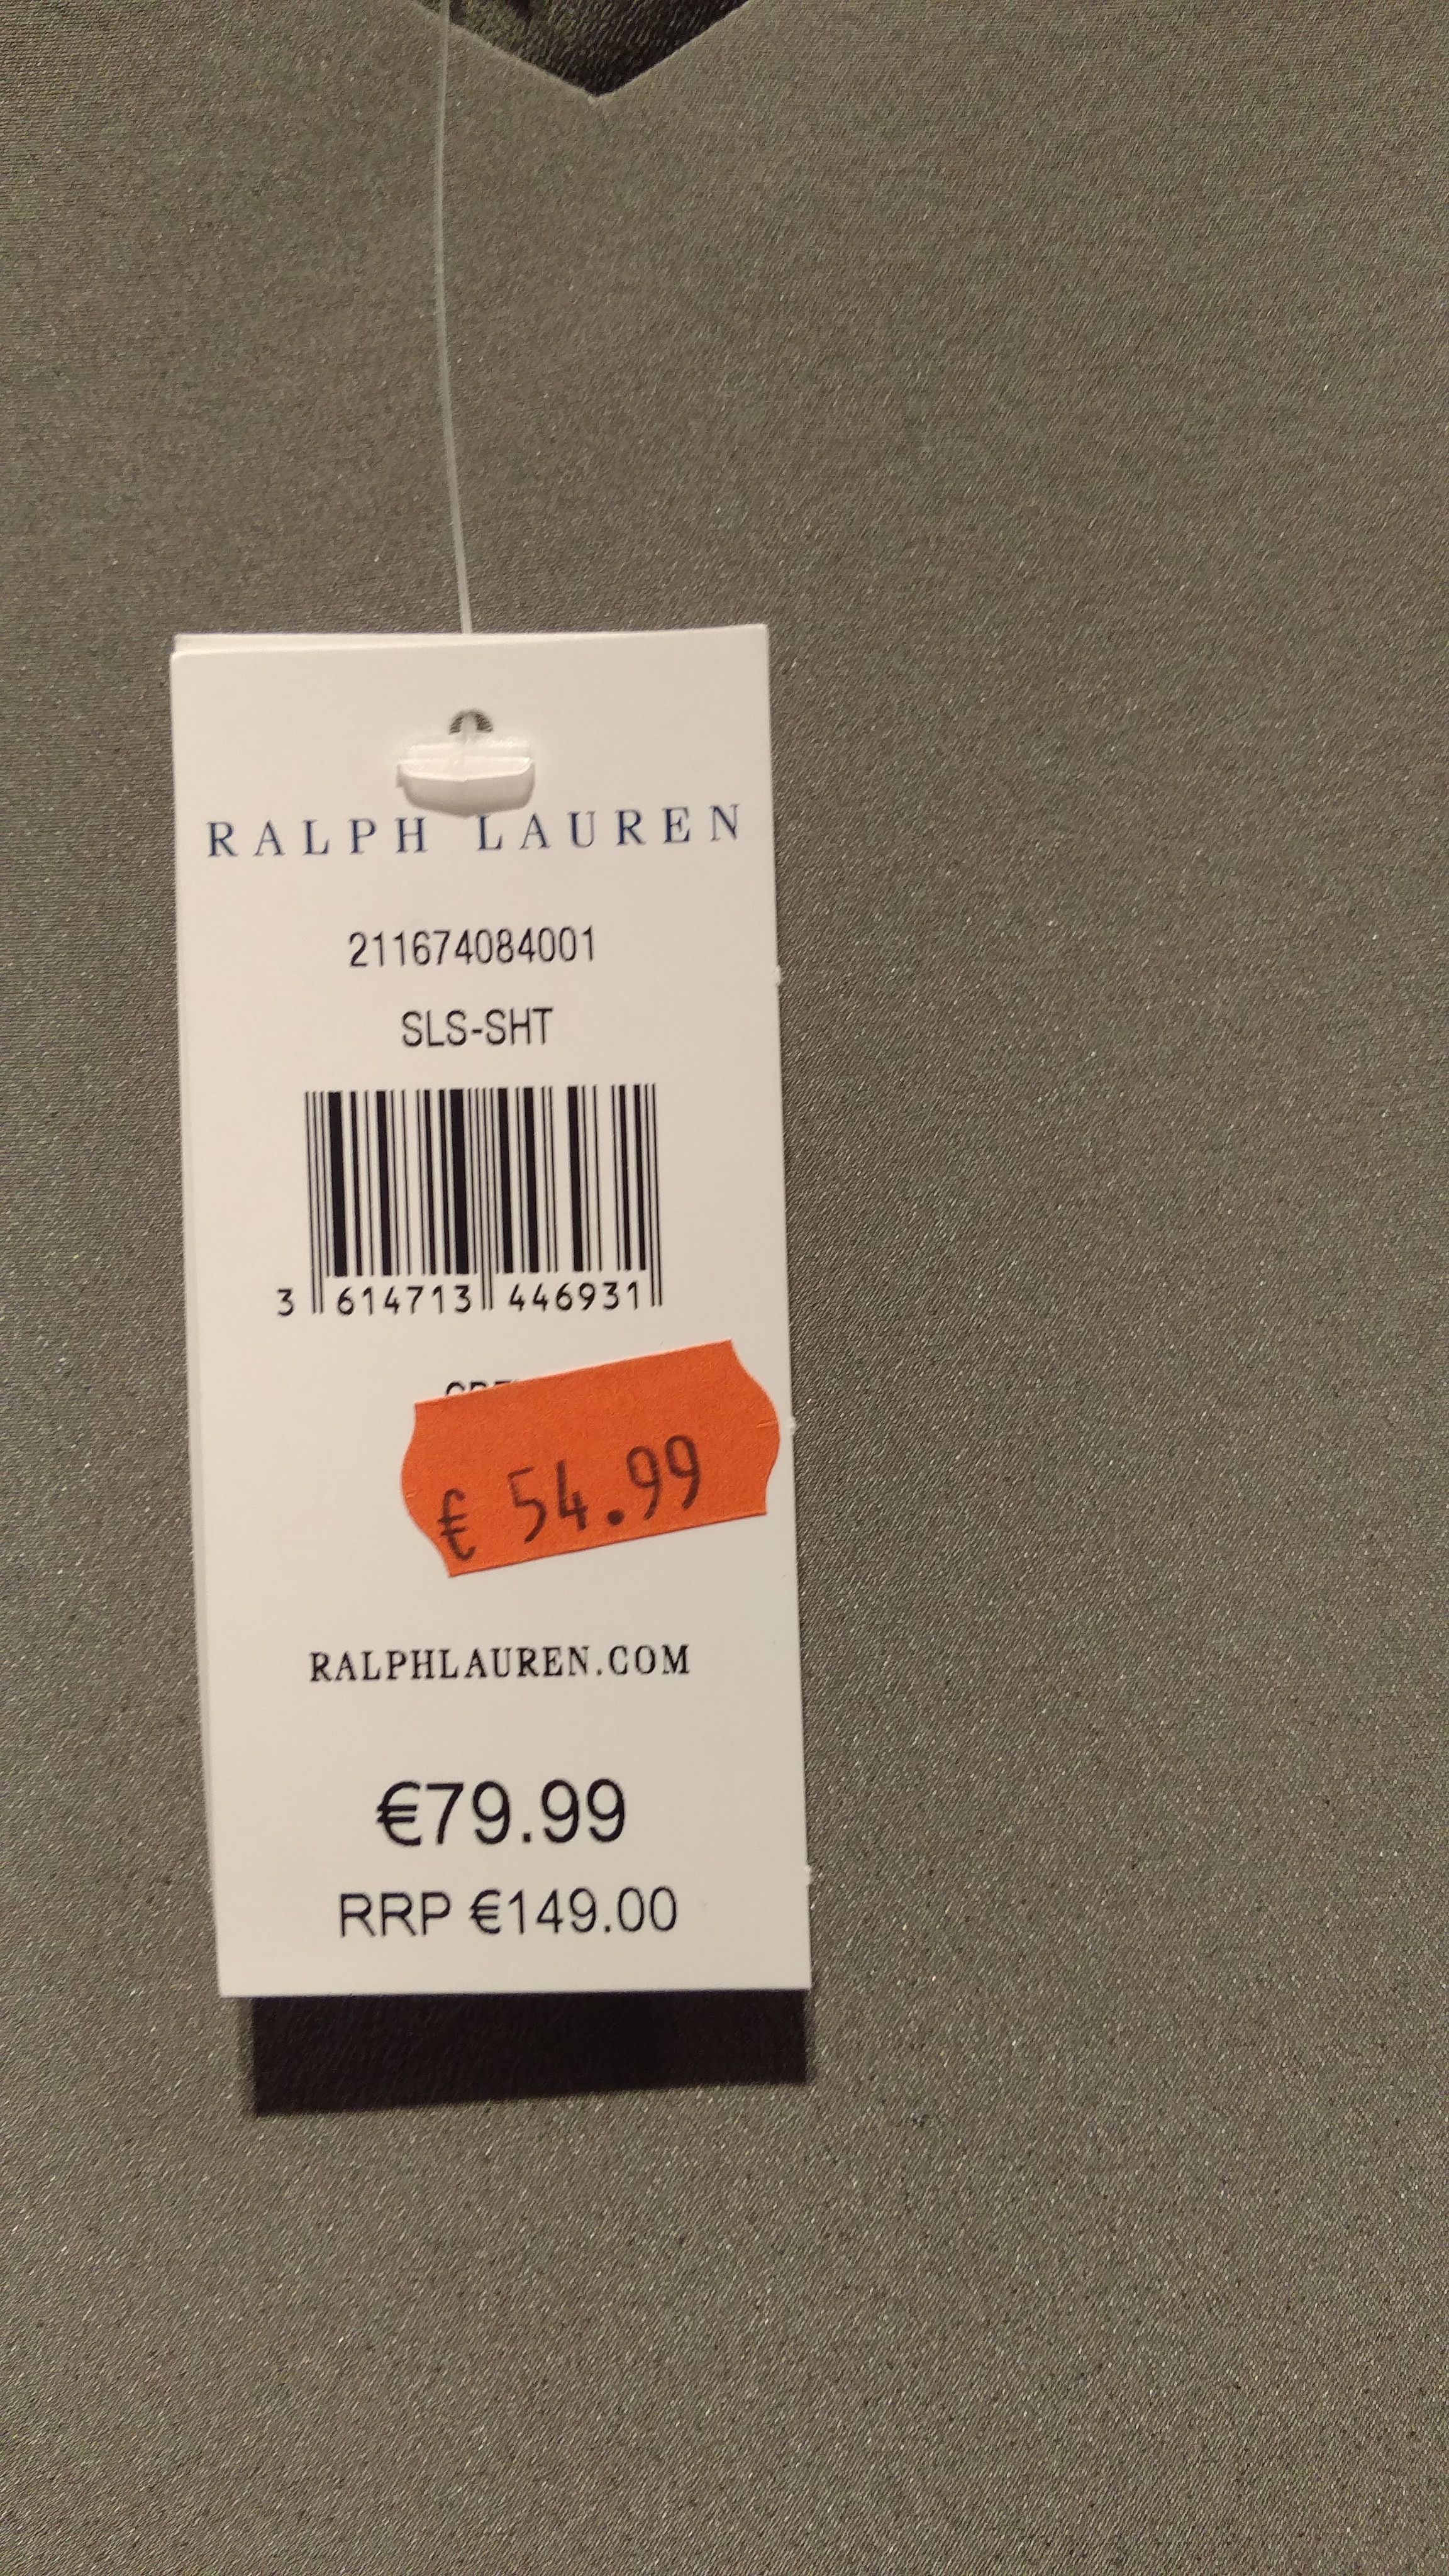 ralph lauren price tag